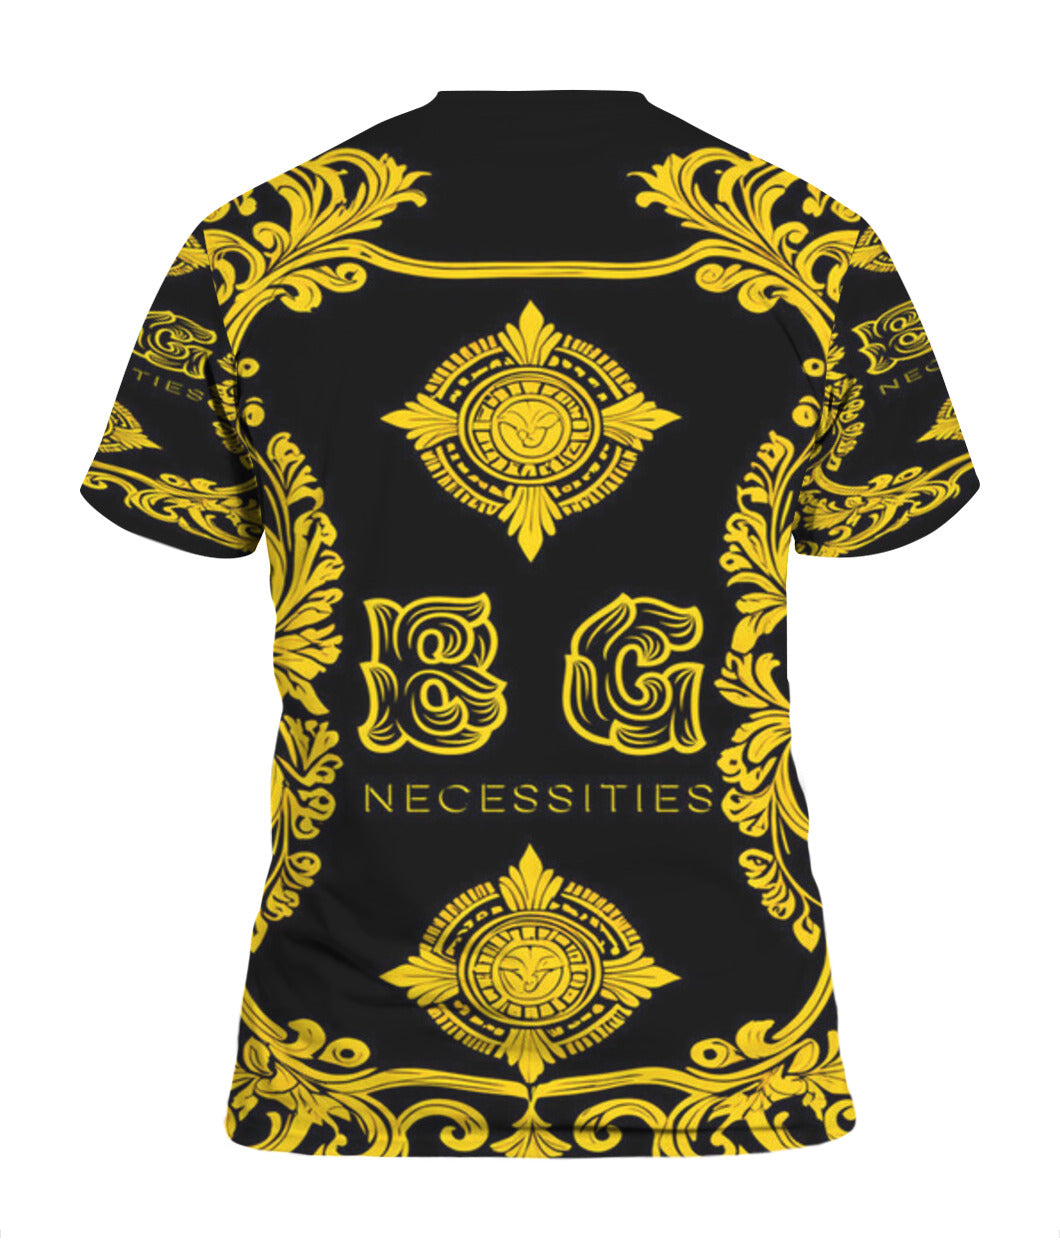 Black and Yellow Necessities Unisex T-Shirt by Burning Guitars 